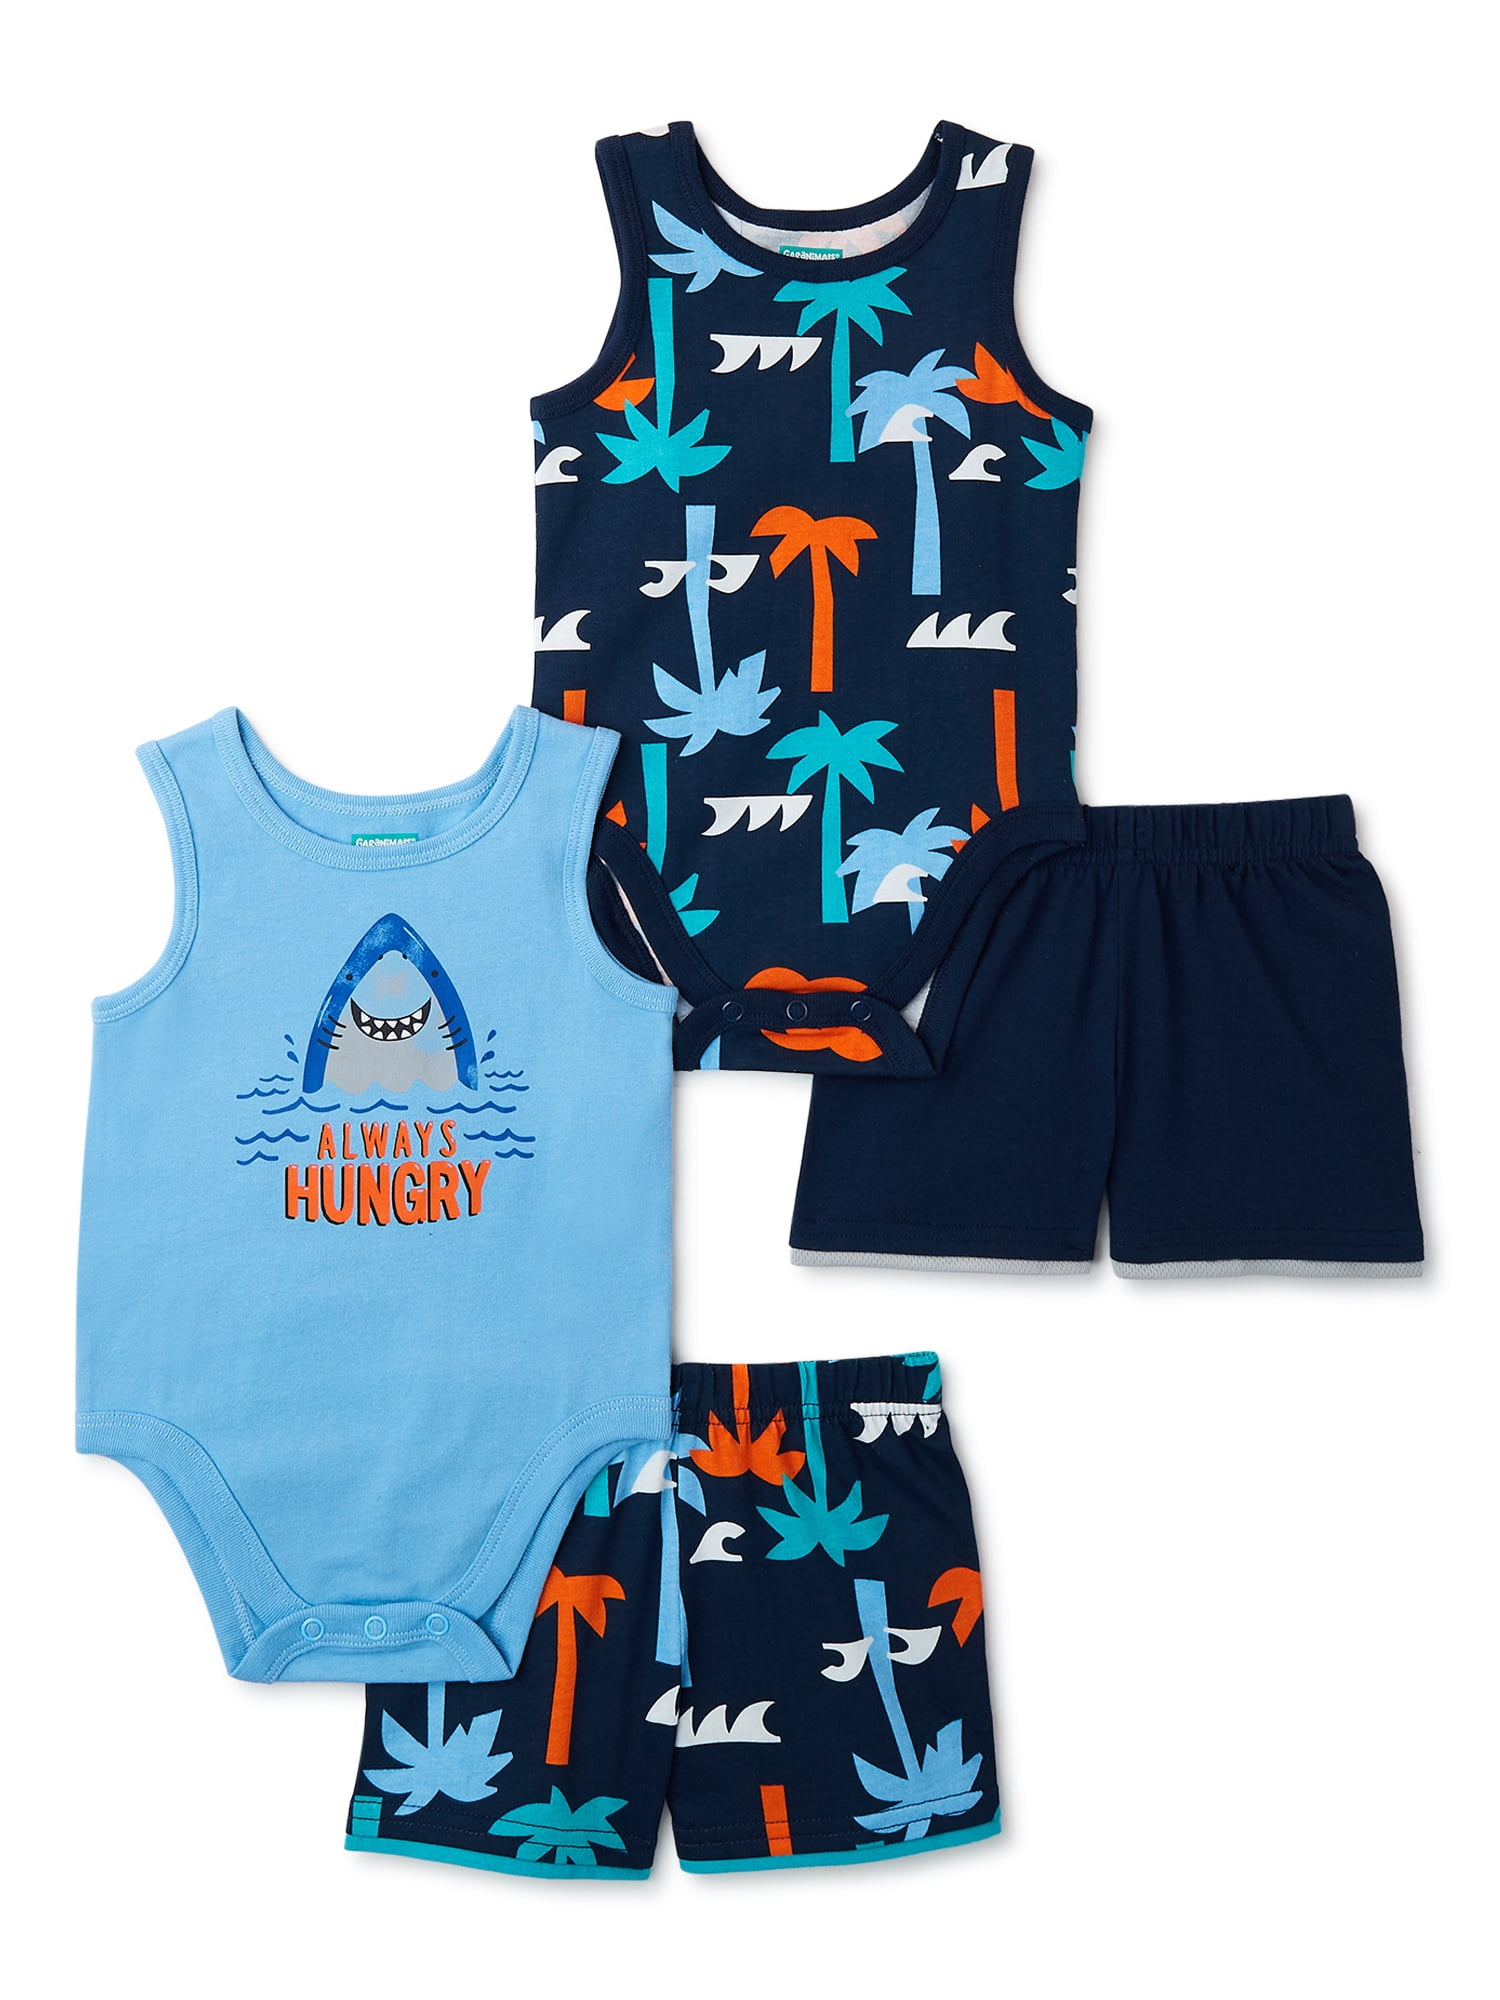 Garanimals Baby Boy Sleeveless Tank Bodysuit and Shorts Outfit Set, 4-Pack,  Sizes 0-24 Months 